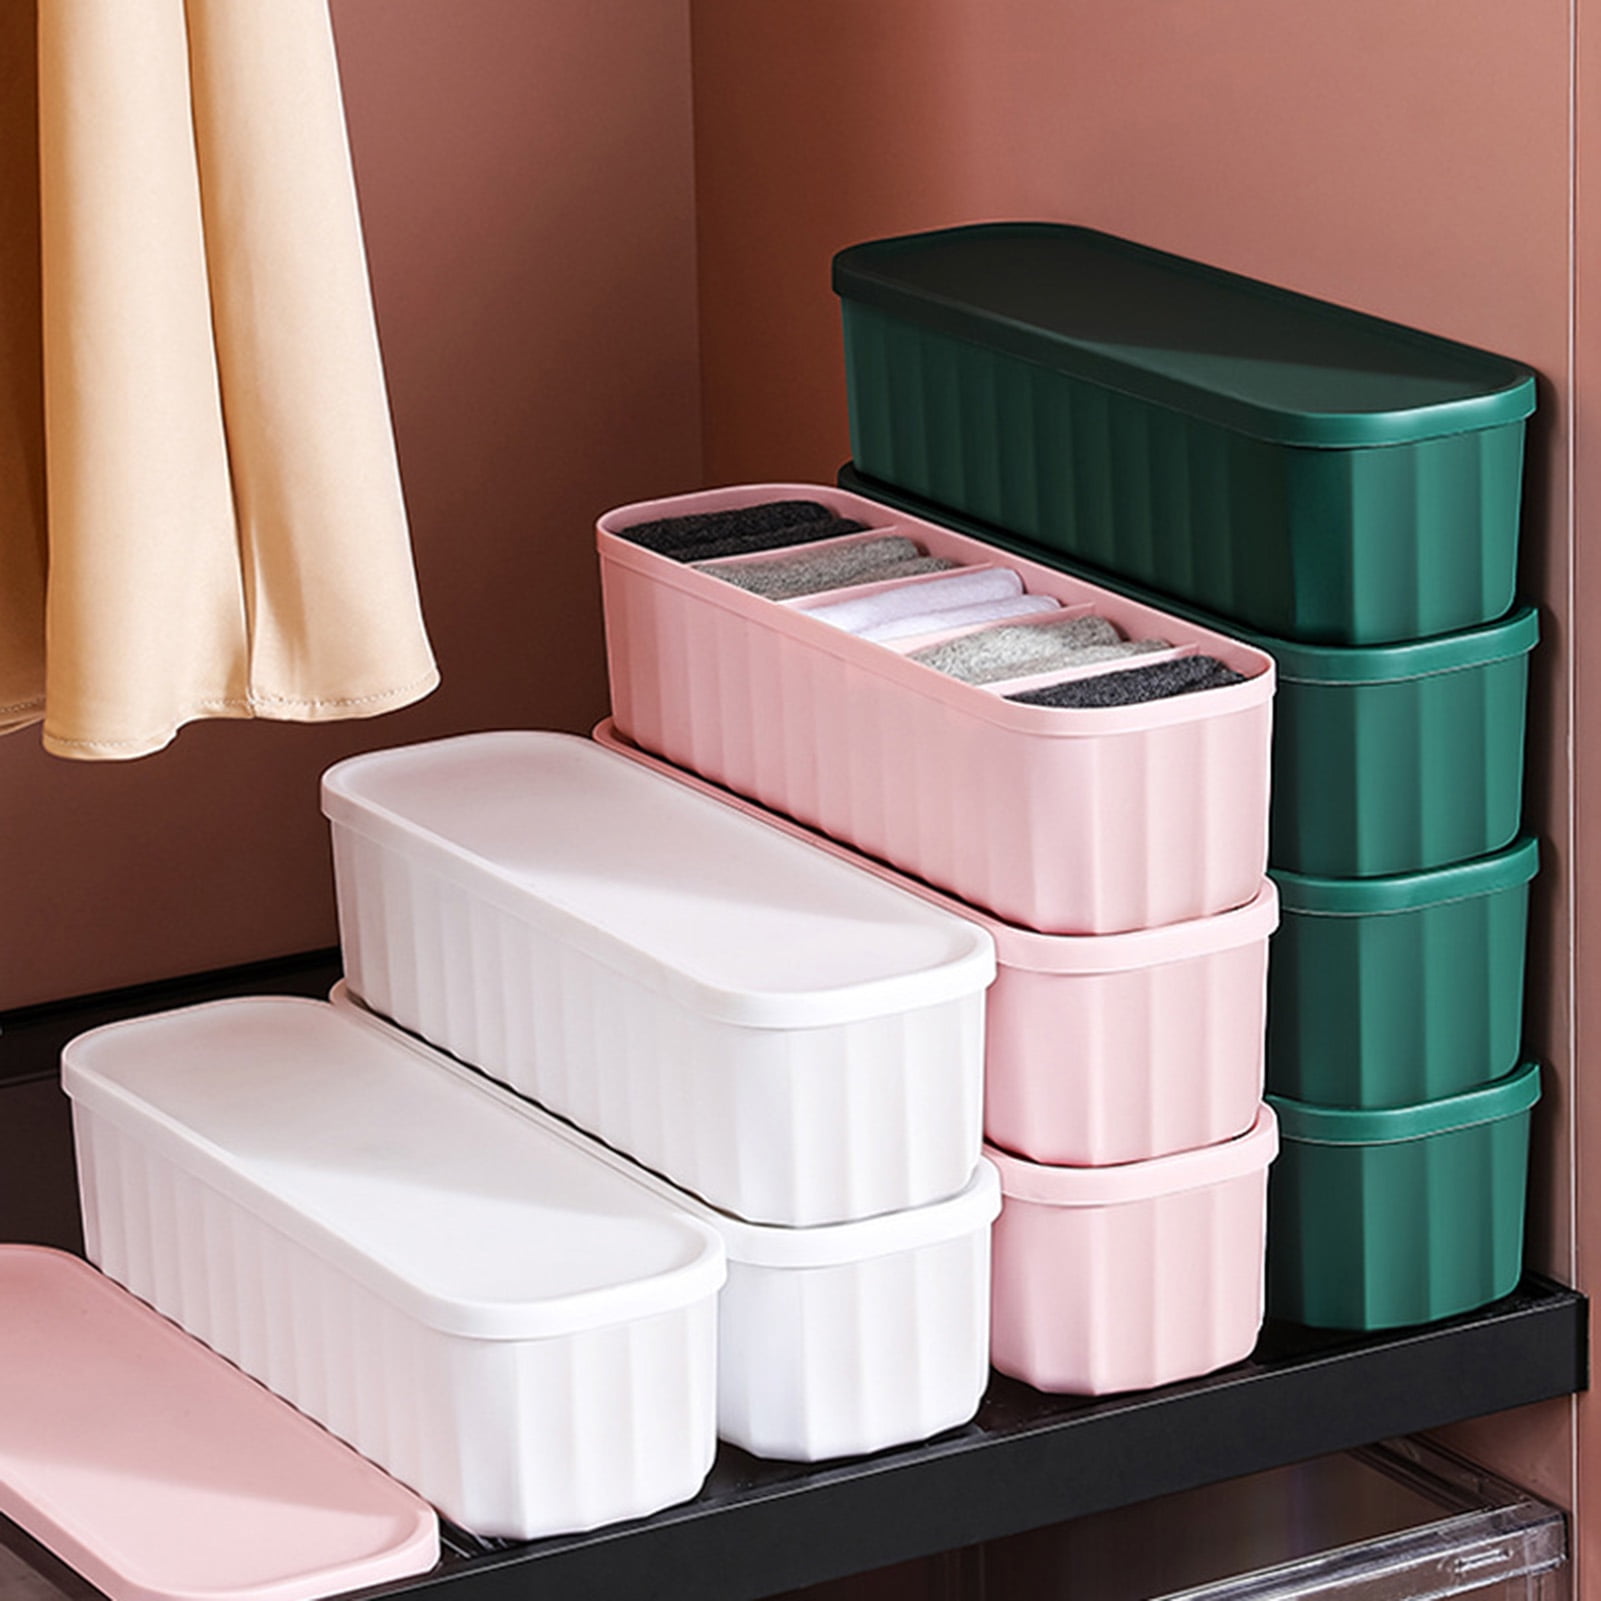 Decorative Plastic Open Home Storage Bins Organizer Baskets, White